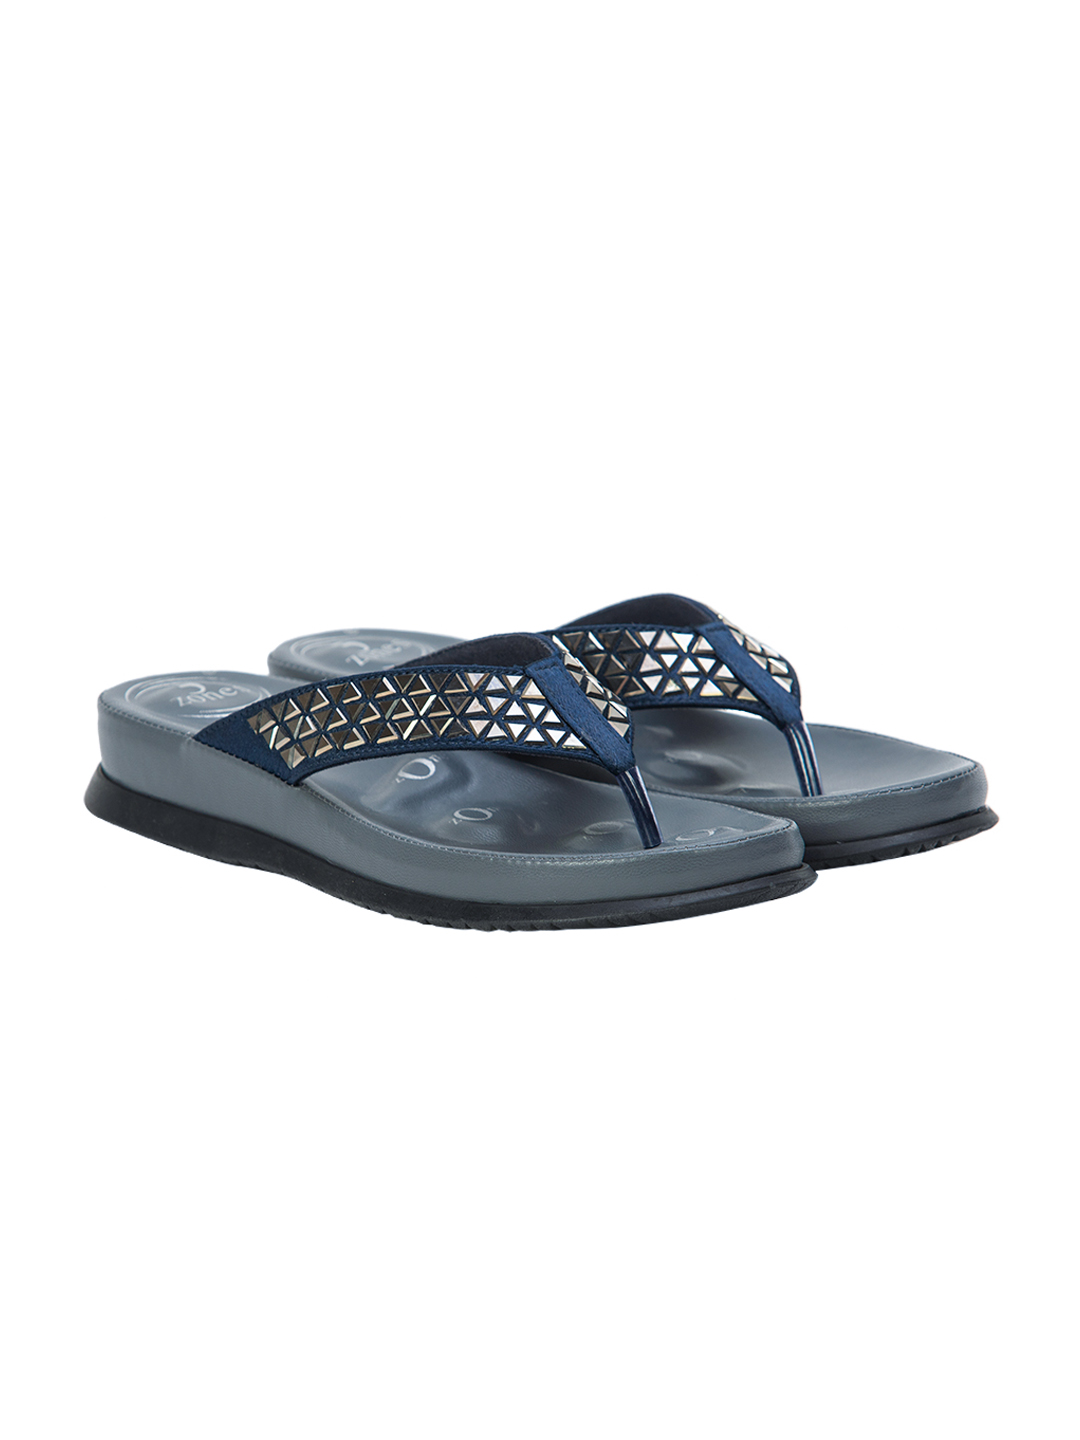 Buy Von Wellx Germany Comfort Beam Blue Slippers Online in Salalah